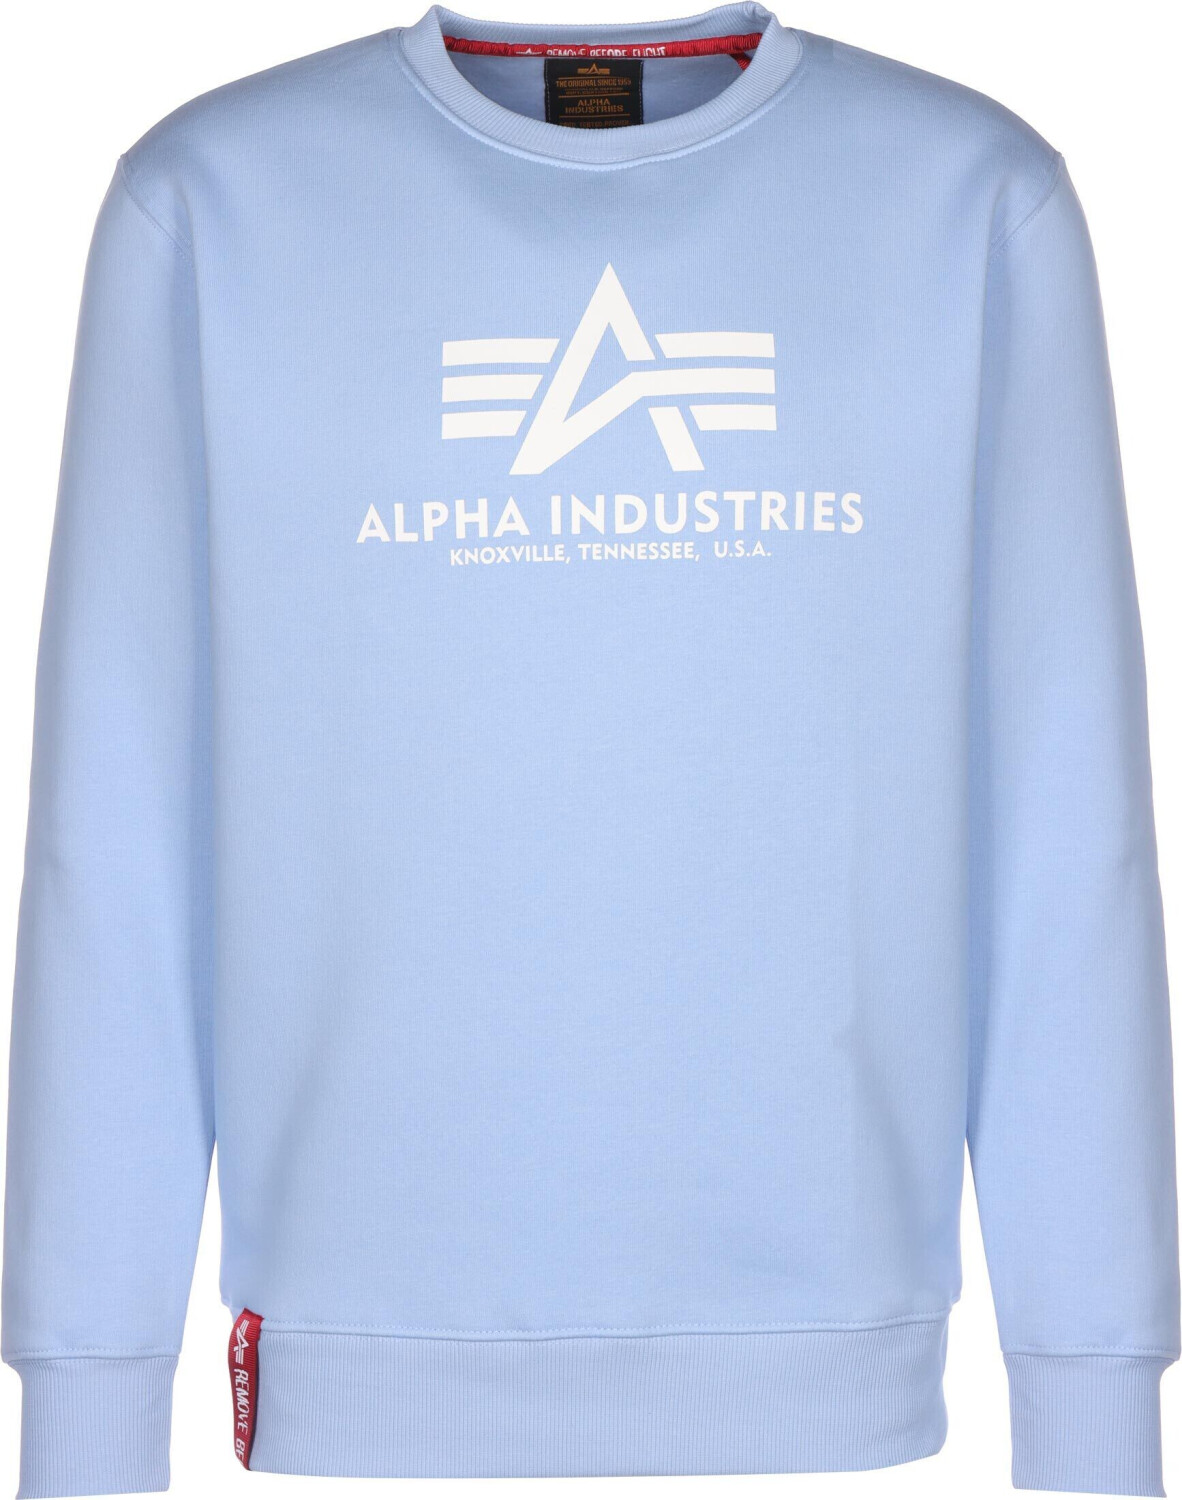 Alpha Industries Basic Sweater light blue (178302-513) ab 49,95 € |  Preisvergleich bei